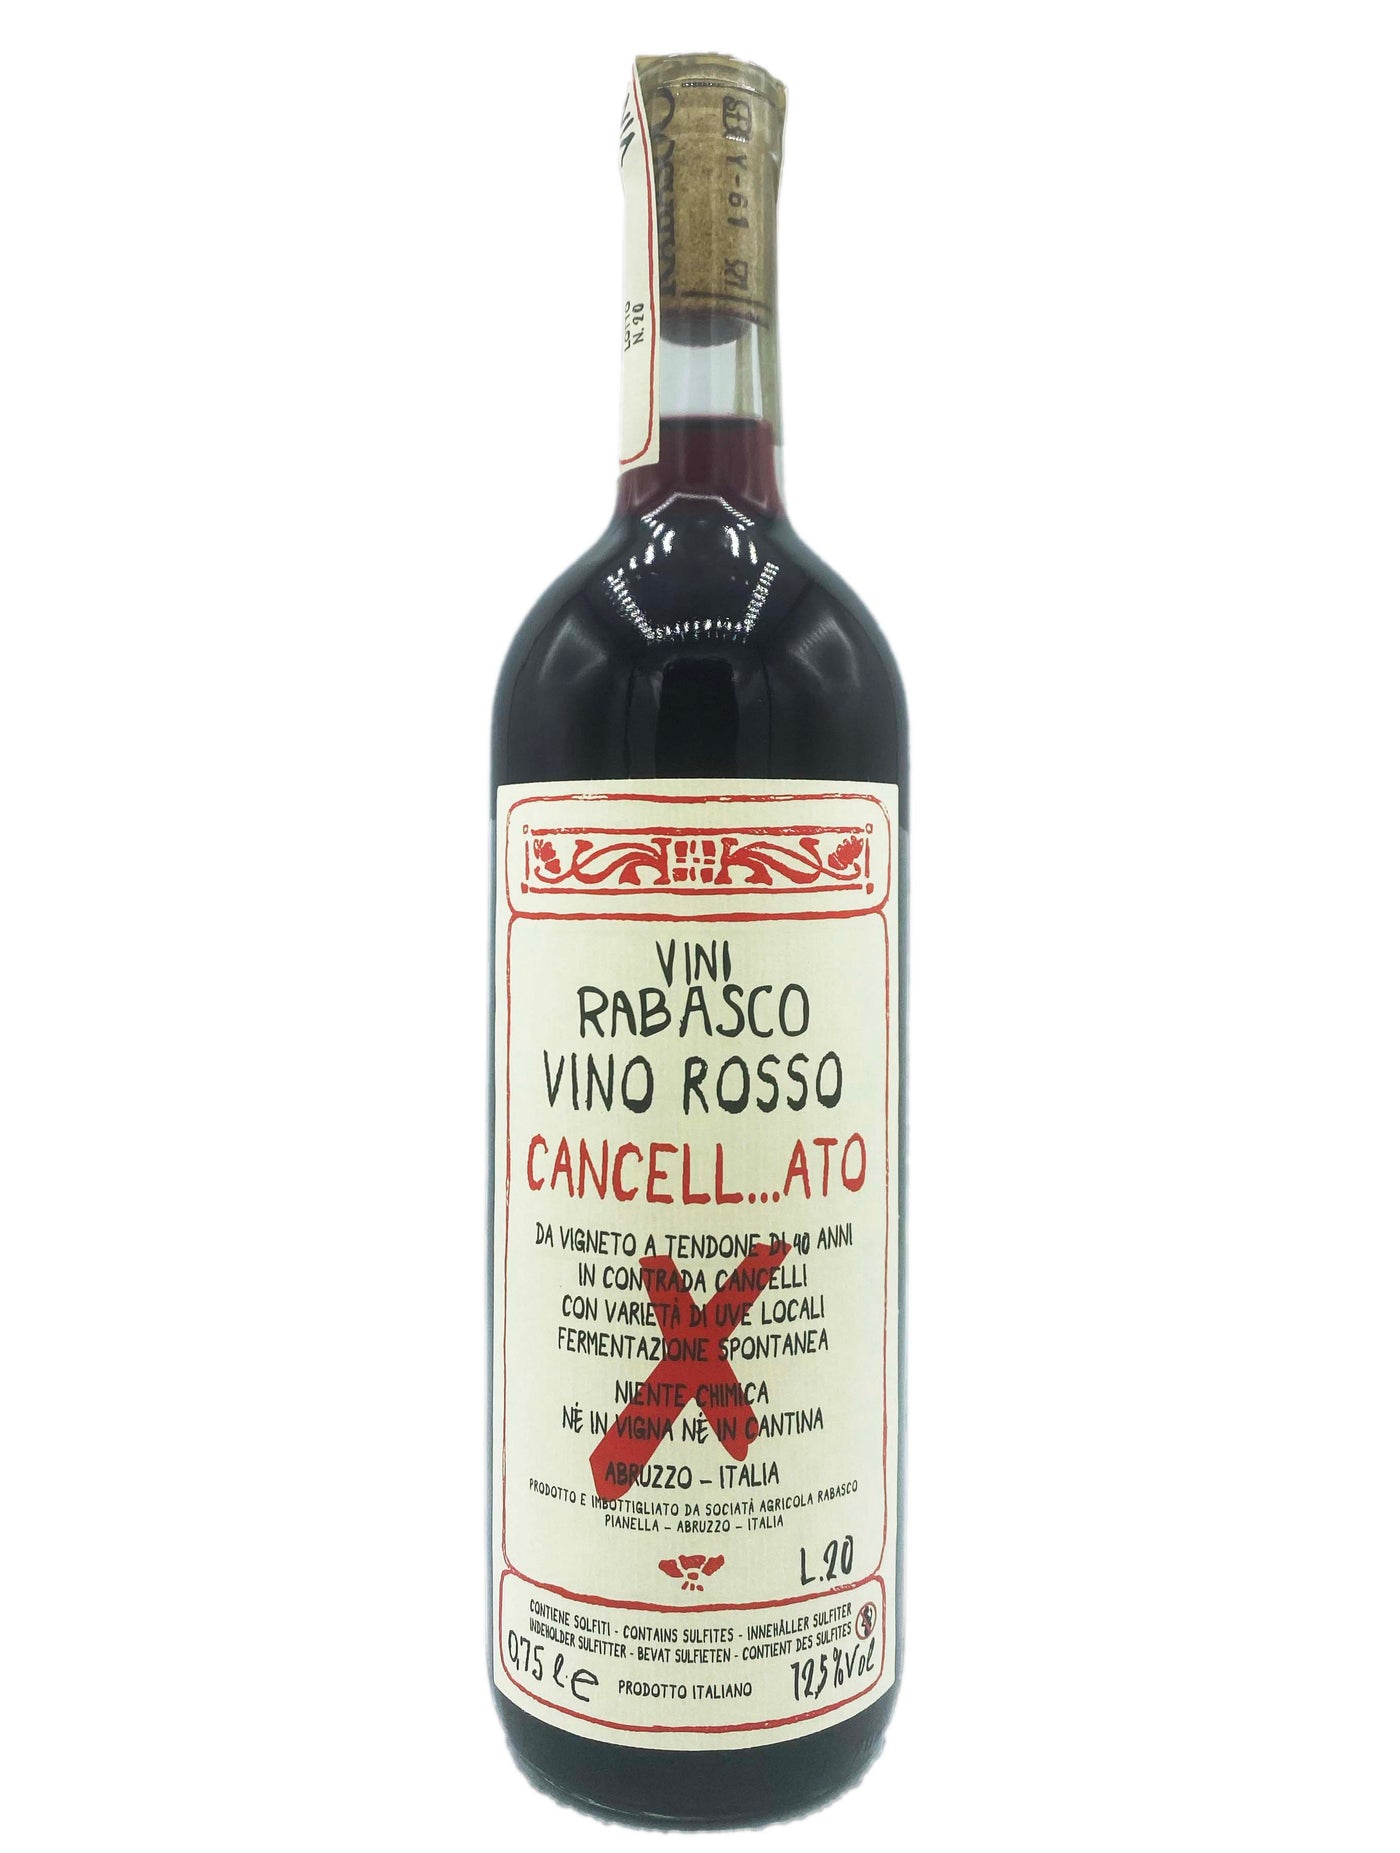 Rabasco Vino Rosso Cancell...ato 2020